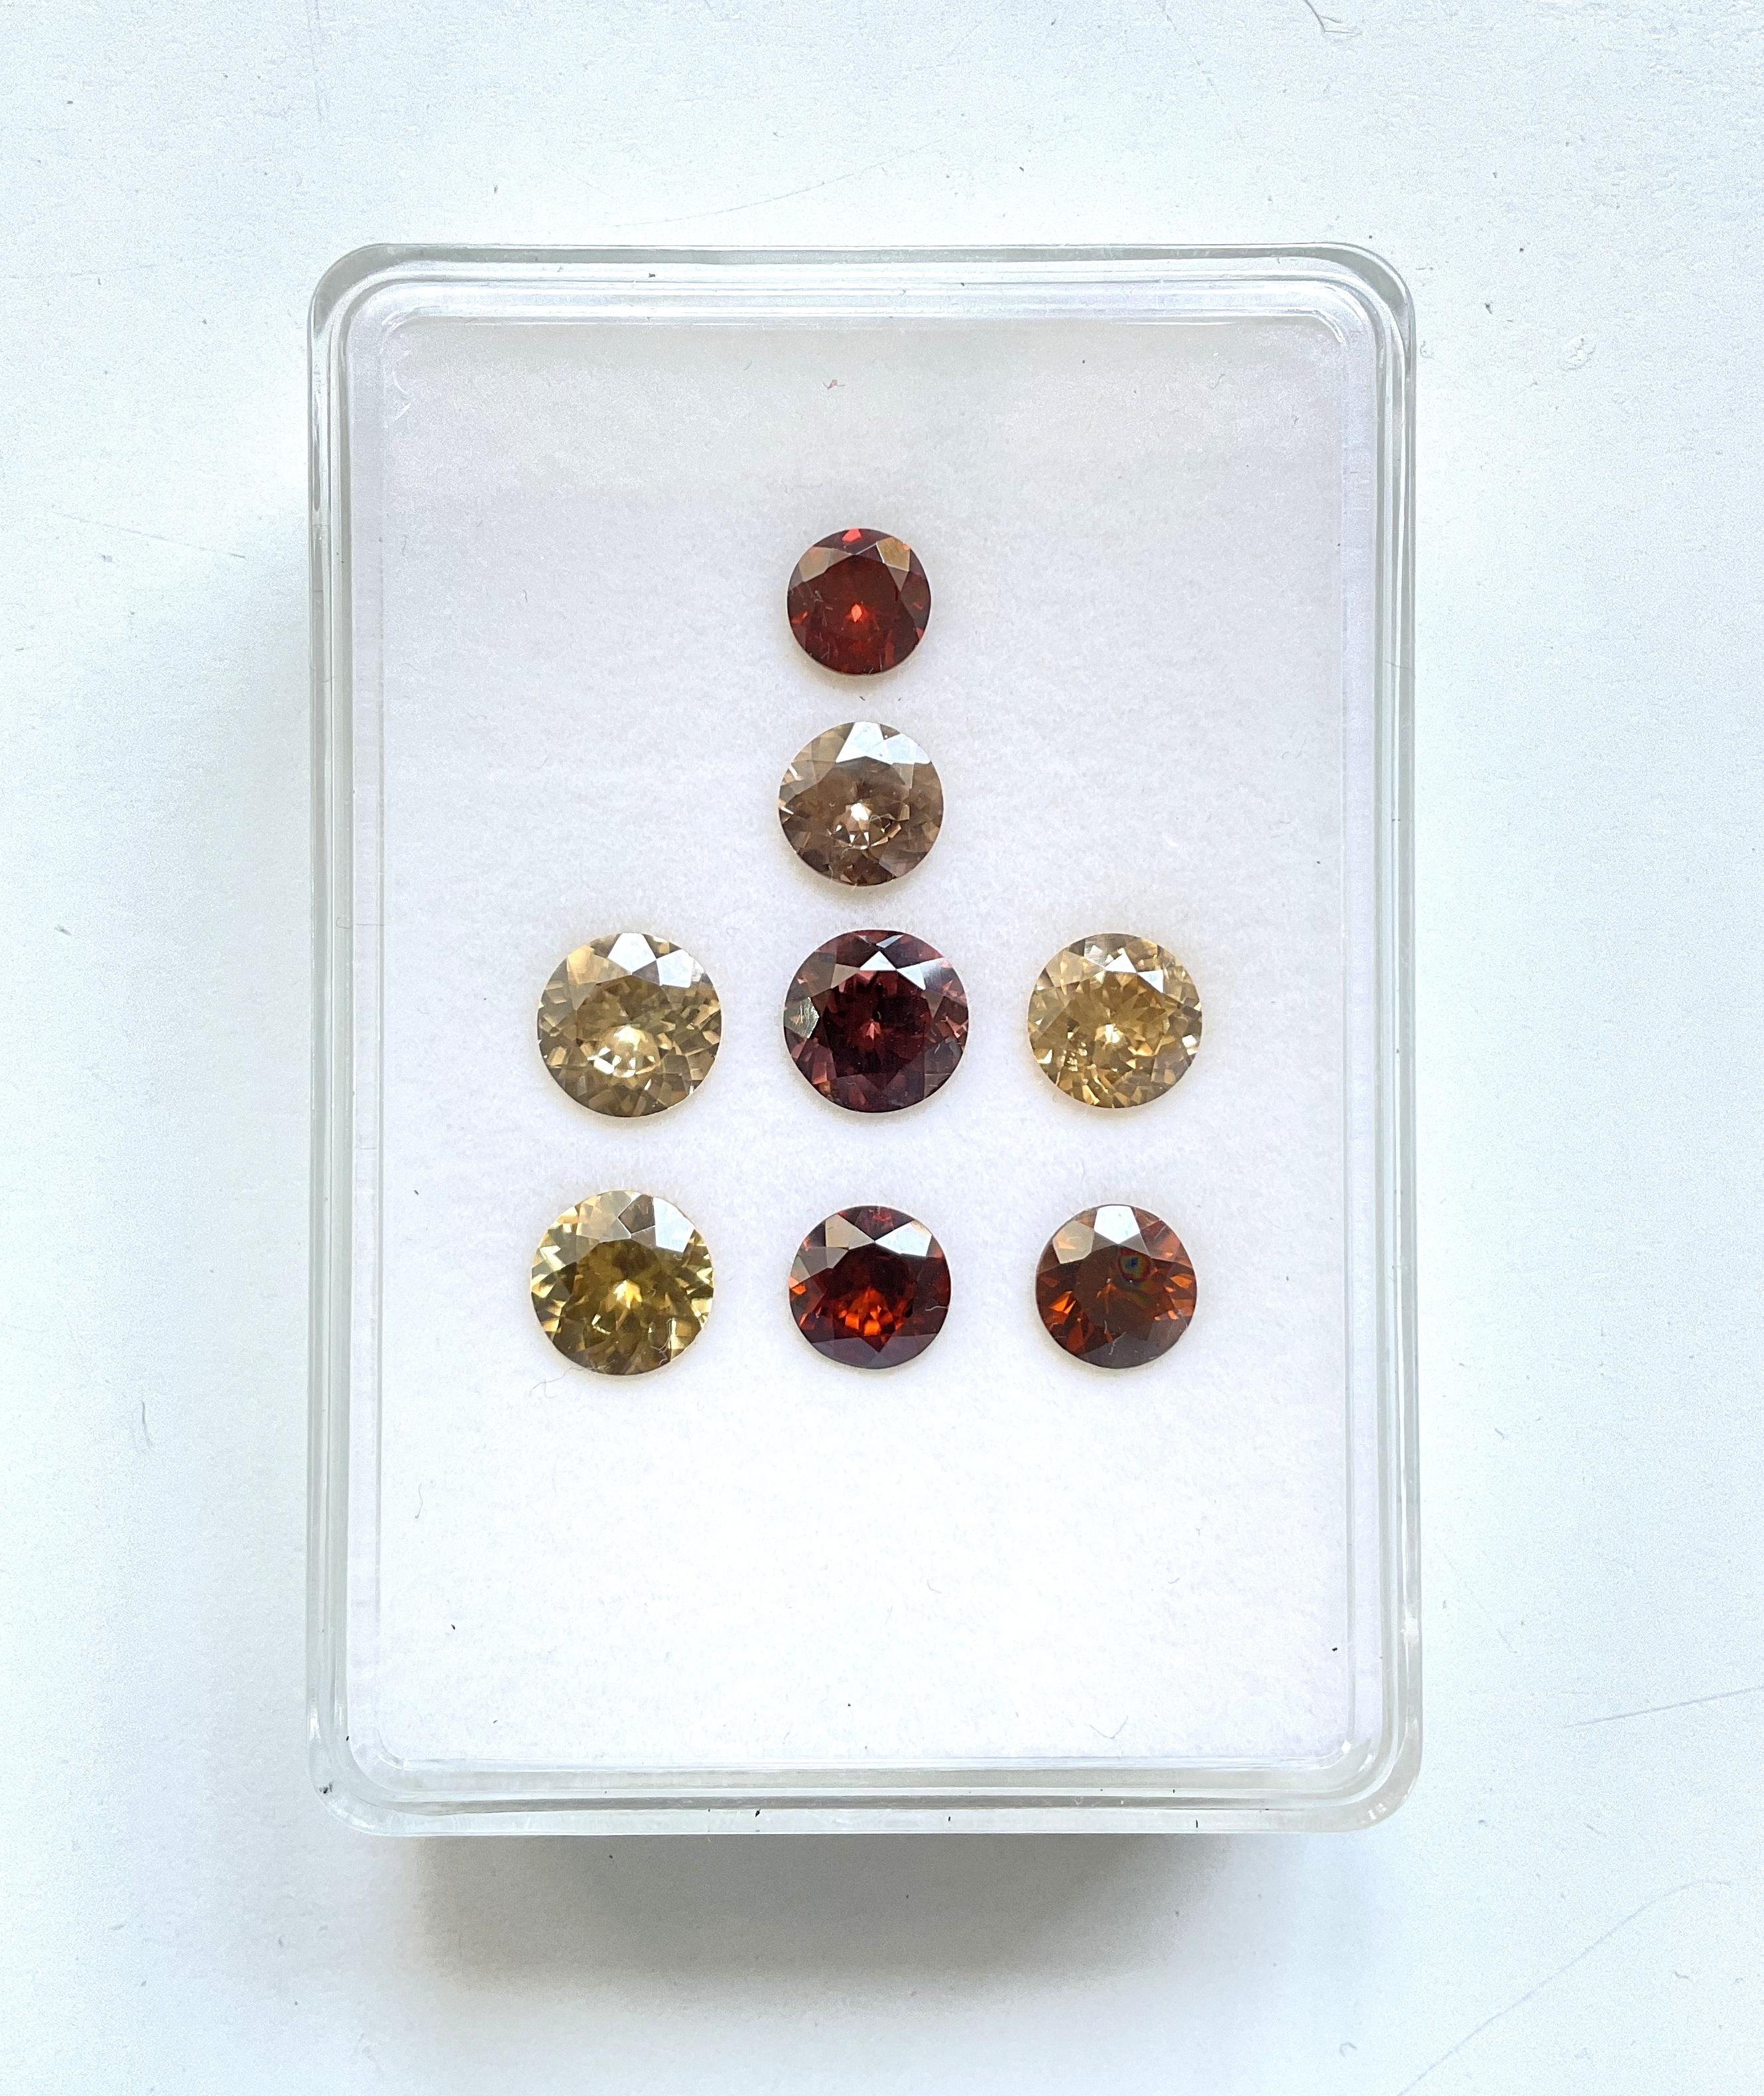 Taille ronde 32.45 Carat Tanzania Zircon Round Faceted Natural Cutstone Fine Jewelry Gemstone en vente